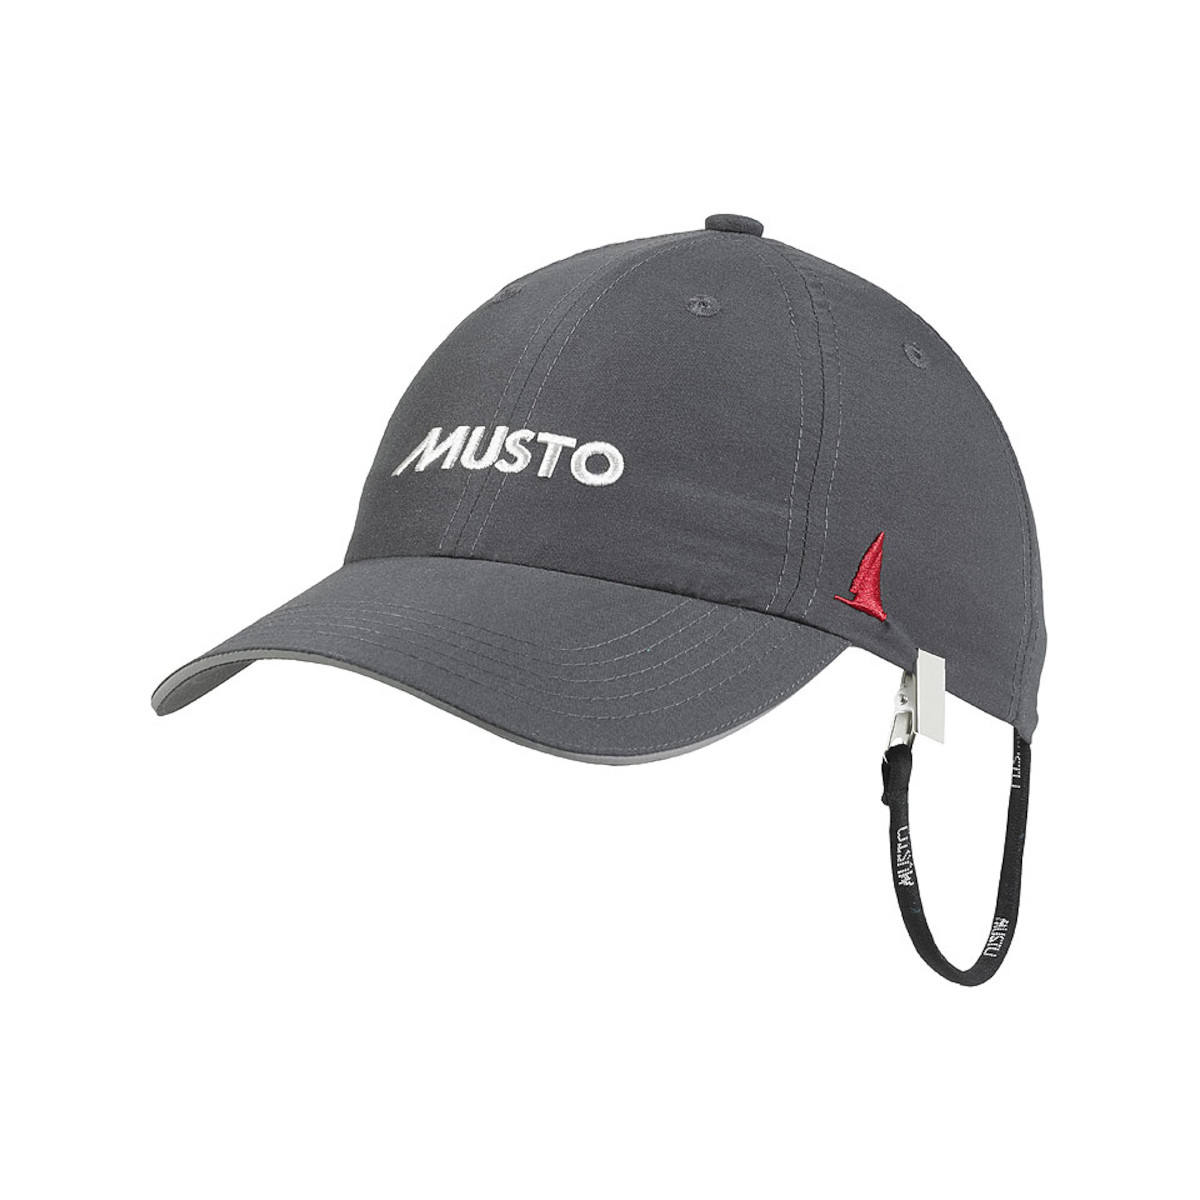 Musto Crew Essential Fast Dry casquette voile anthracite